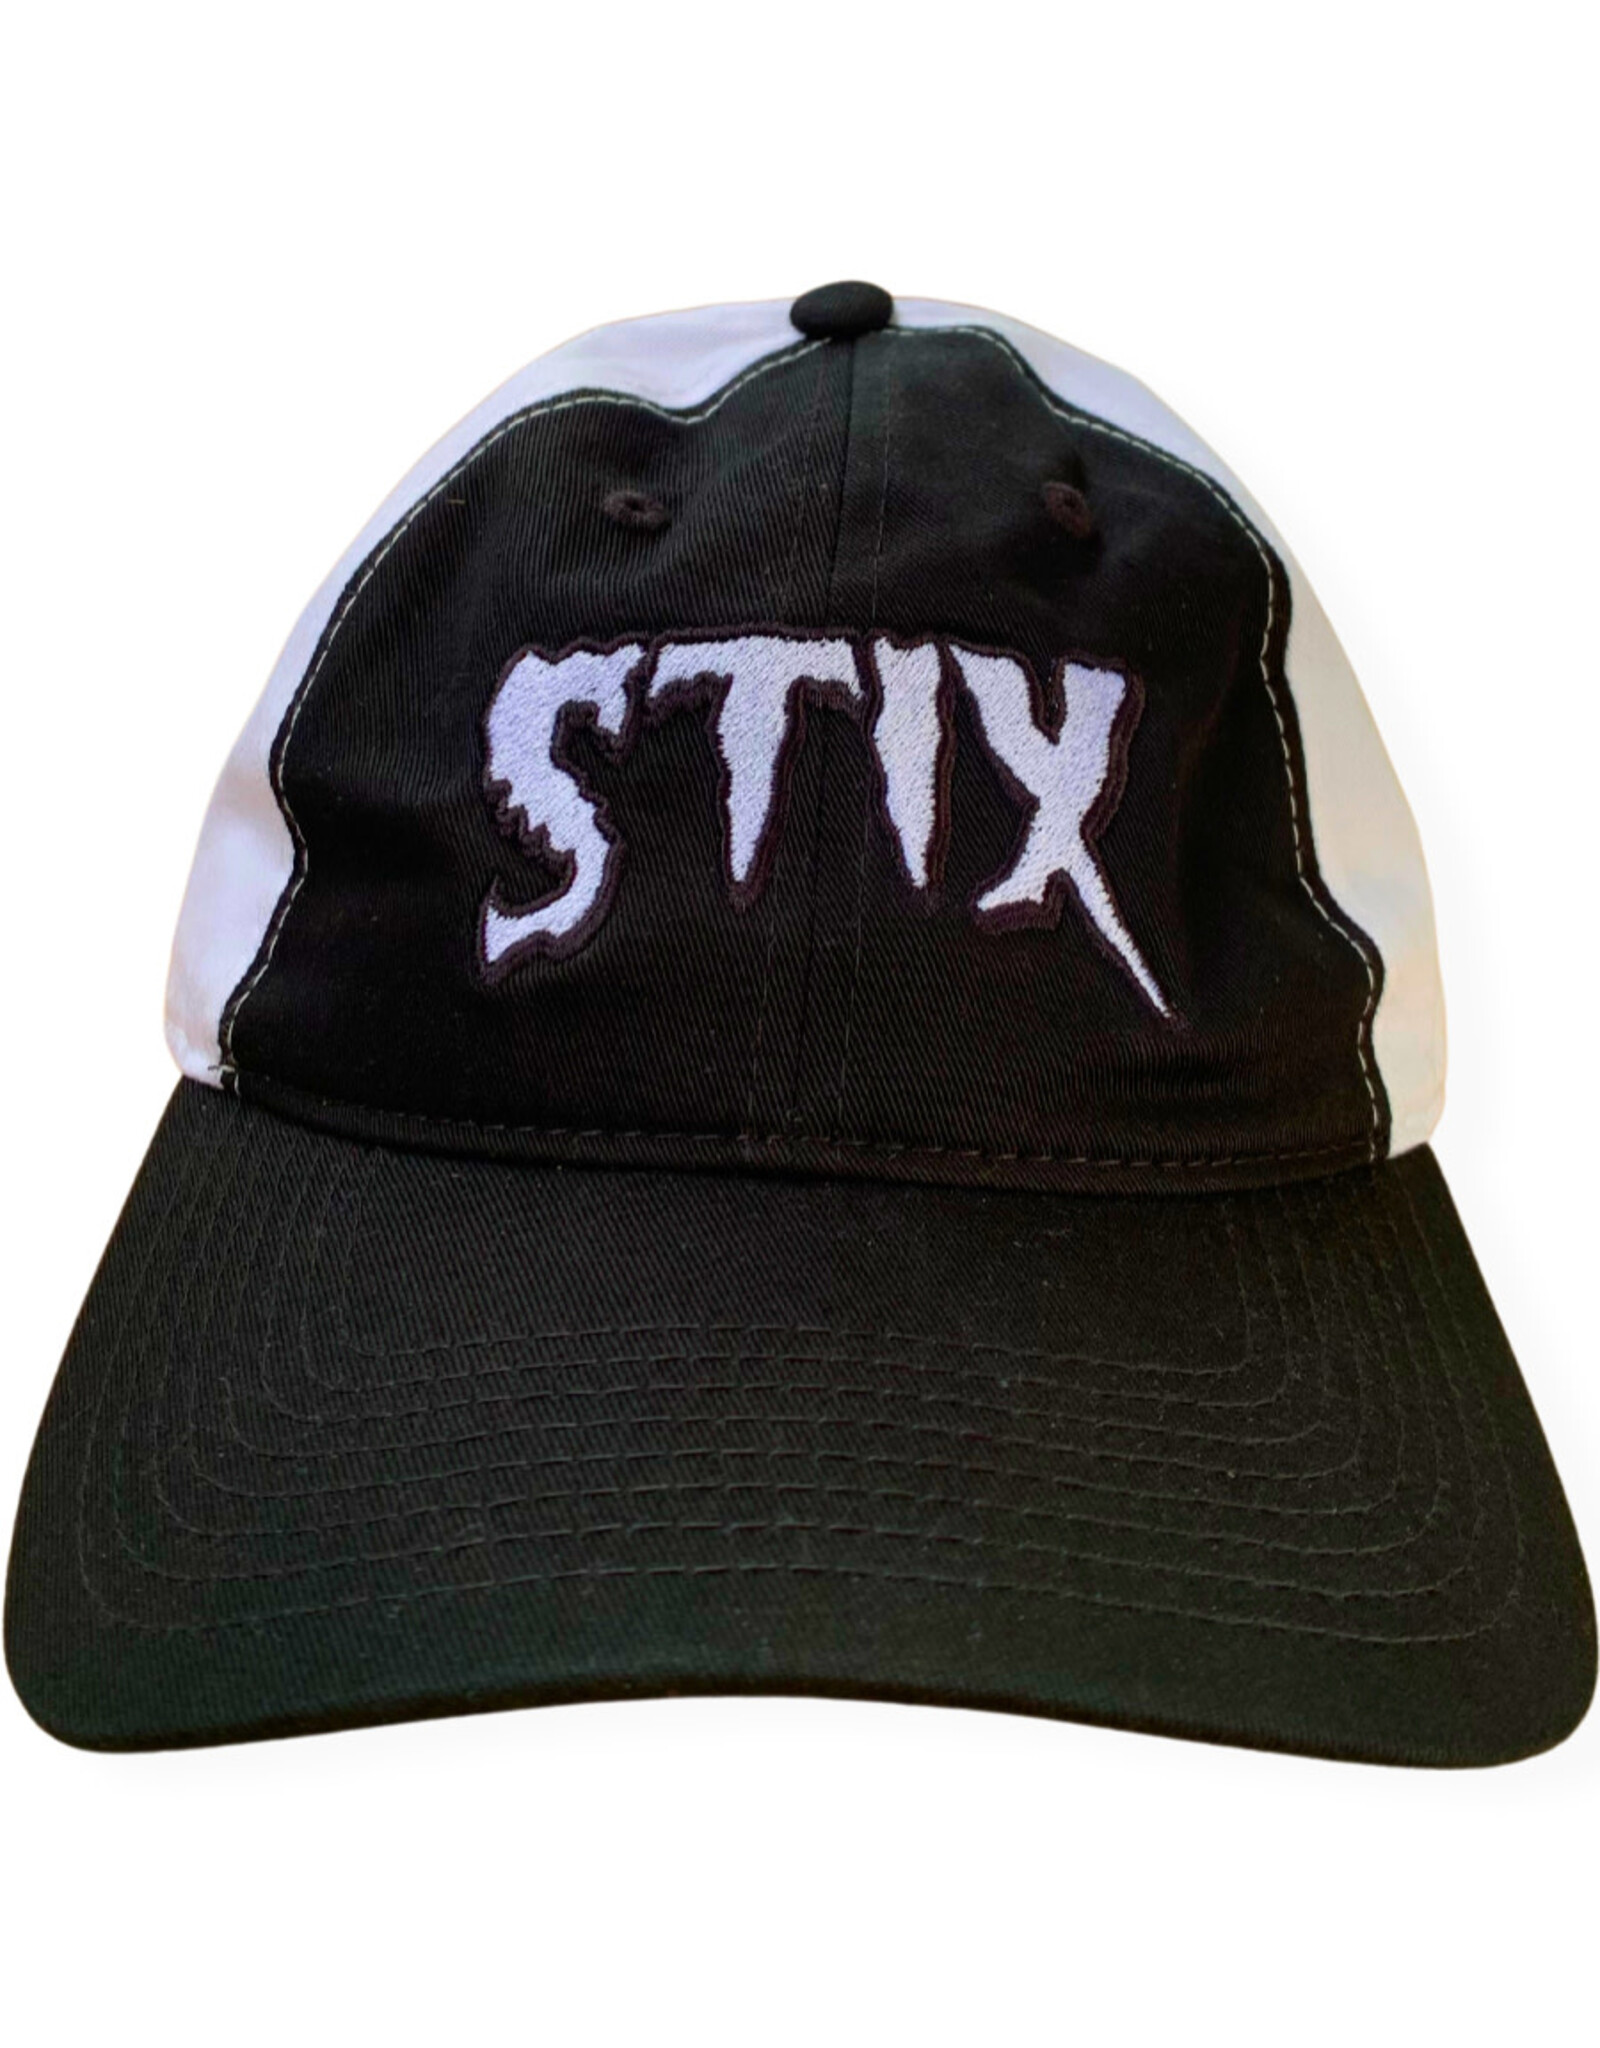 Stix SGV Stix Hat Bad People Strapback (Black Split/White/Black)